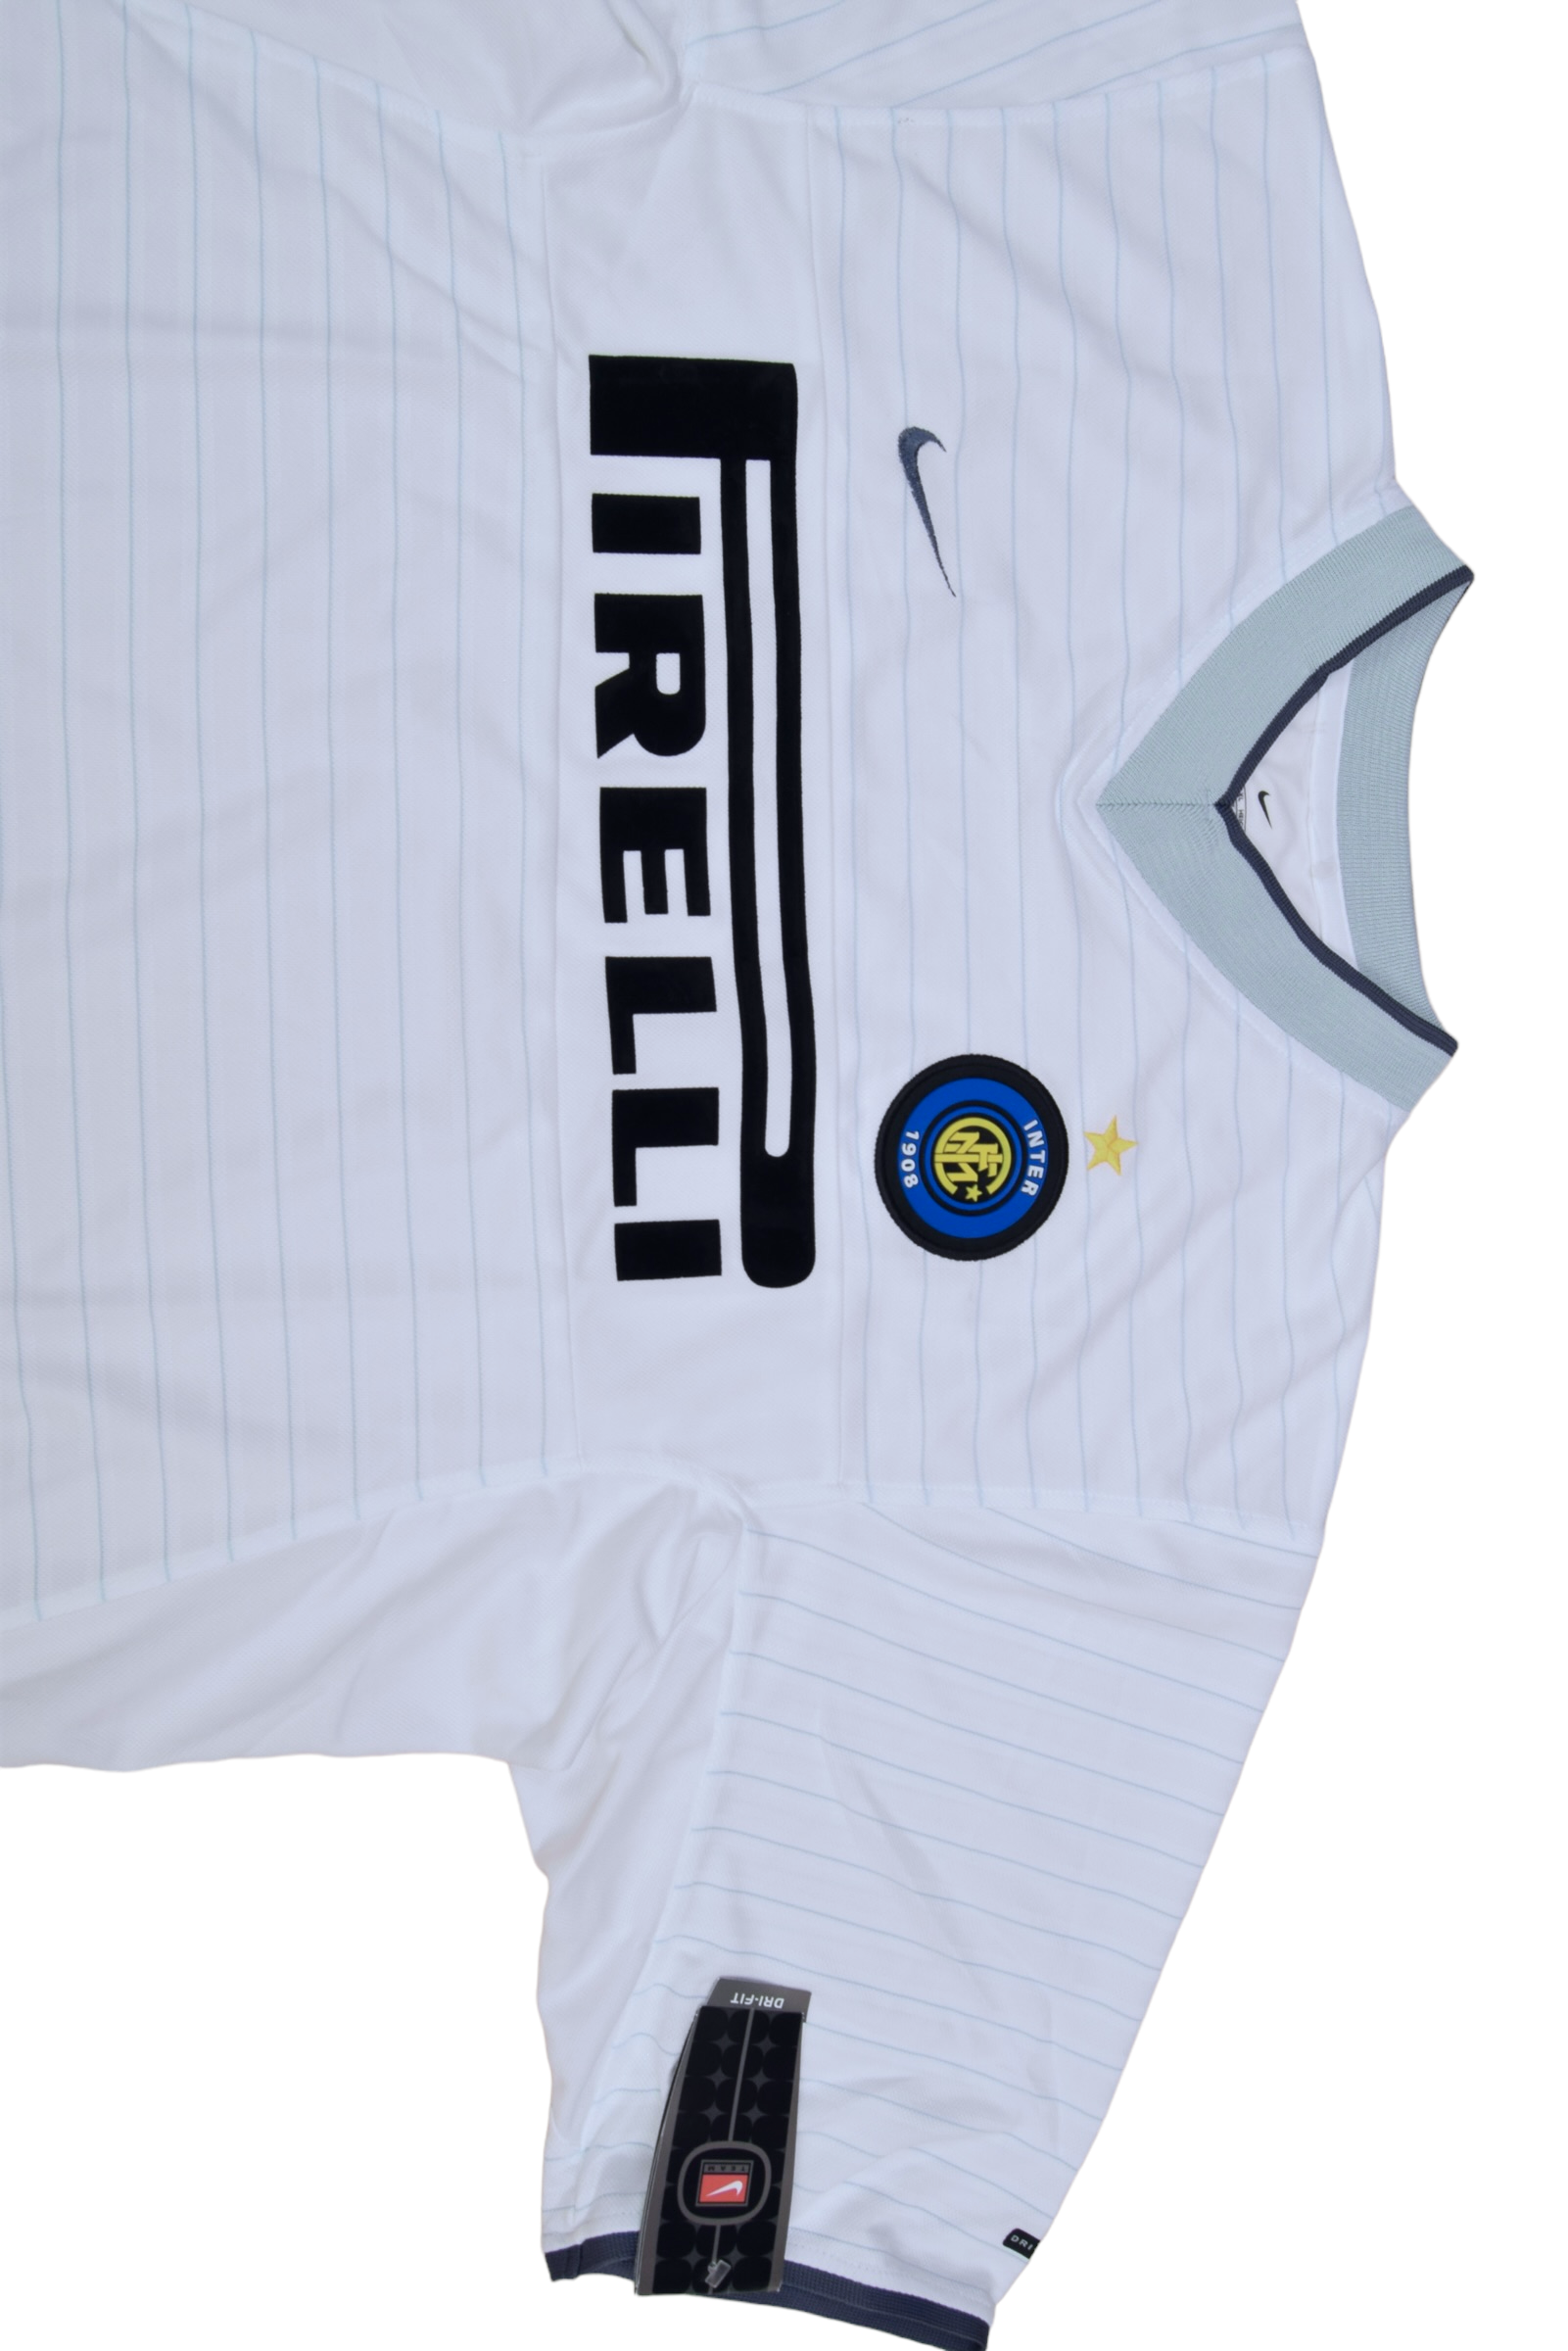 Inter Internazionale Milano Milan Nike 2000-2001 Away Football Shirt White Pirelli Size XL Made in UK BNWT NOS OG DS